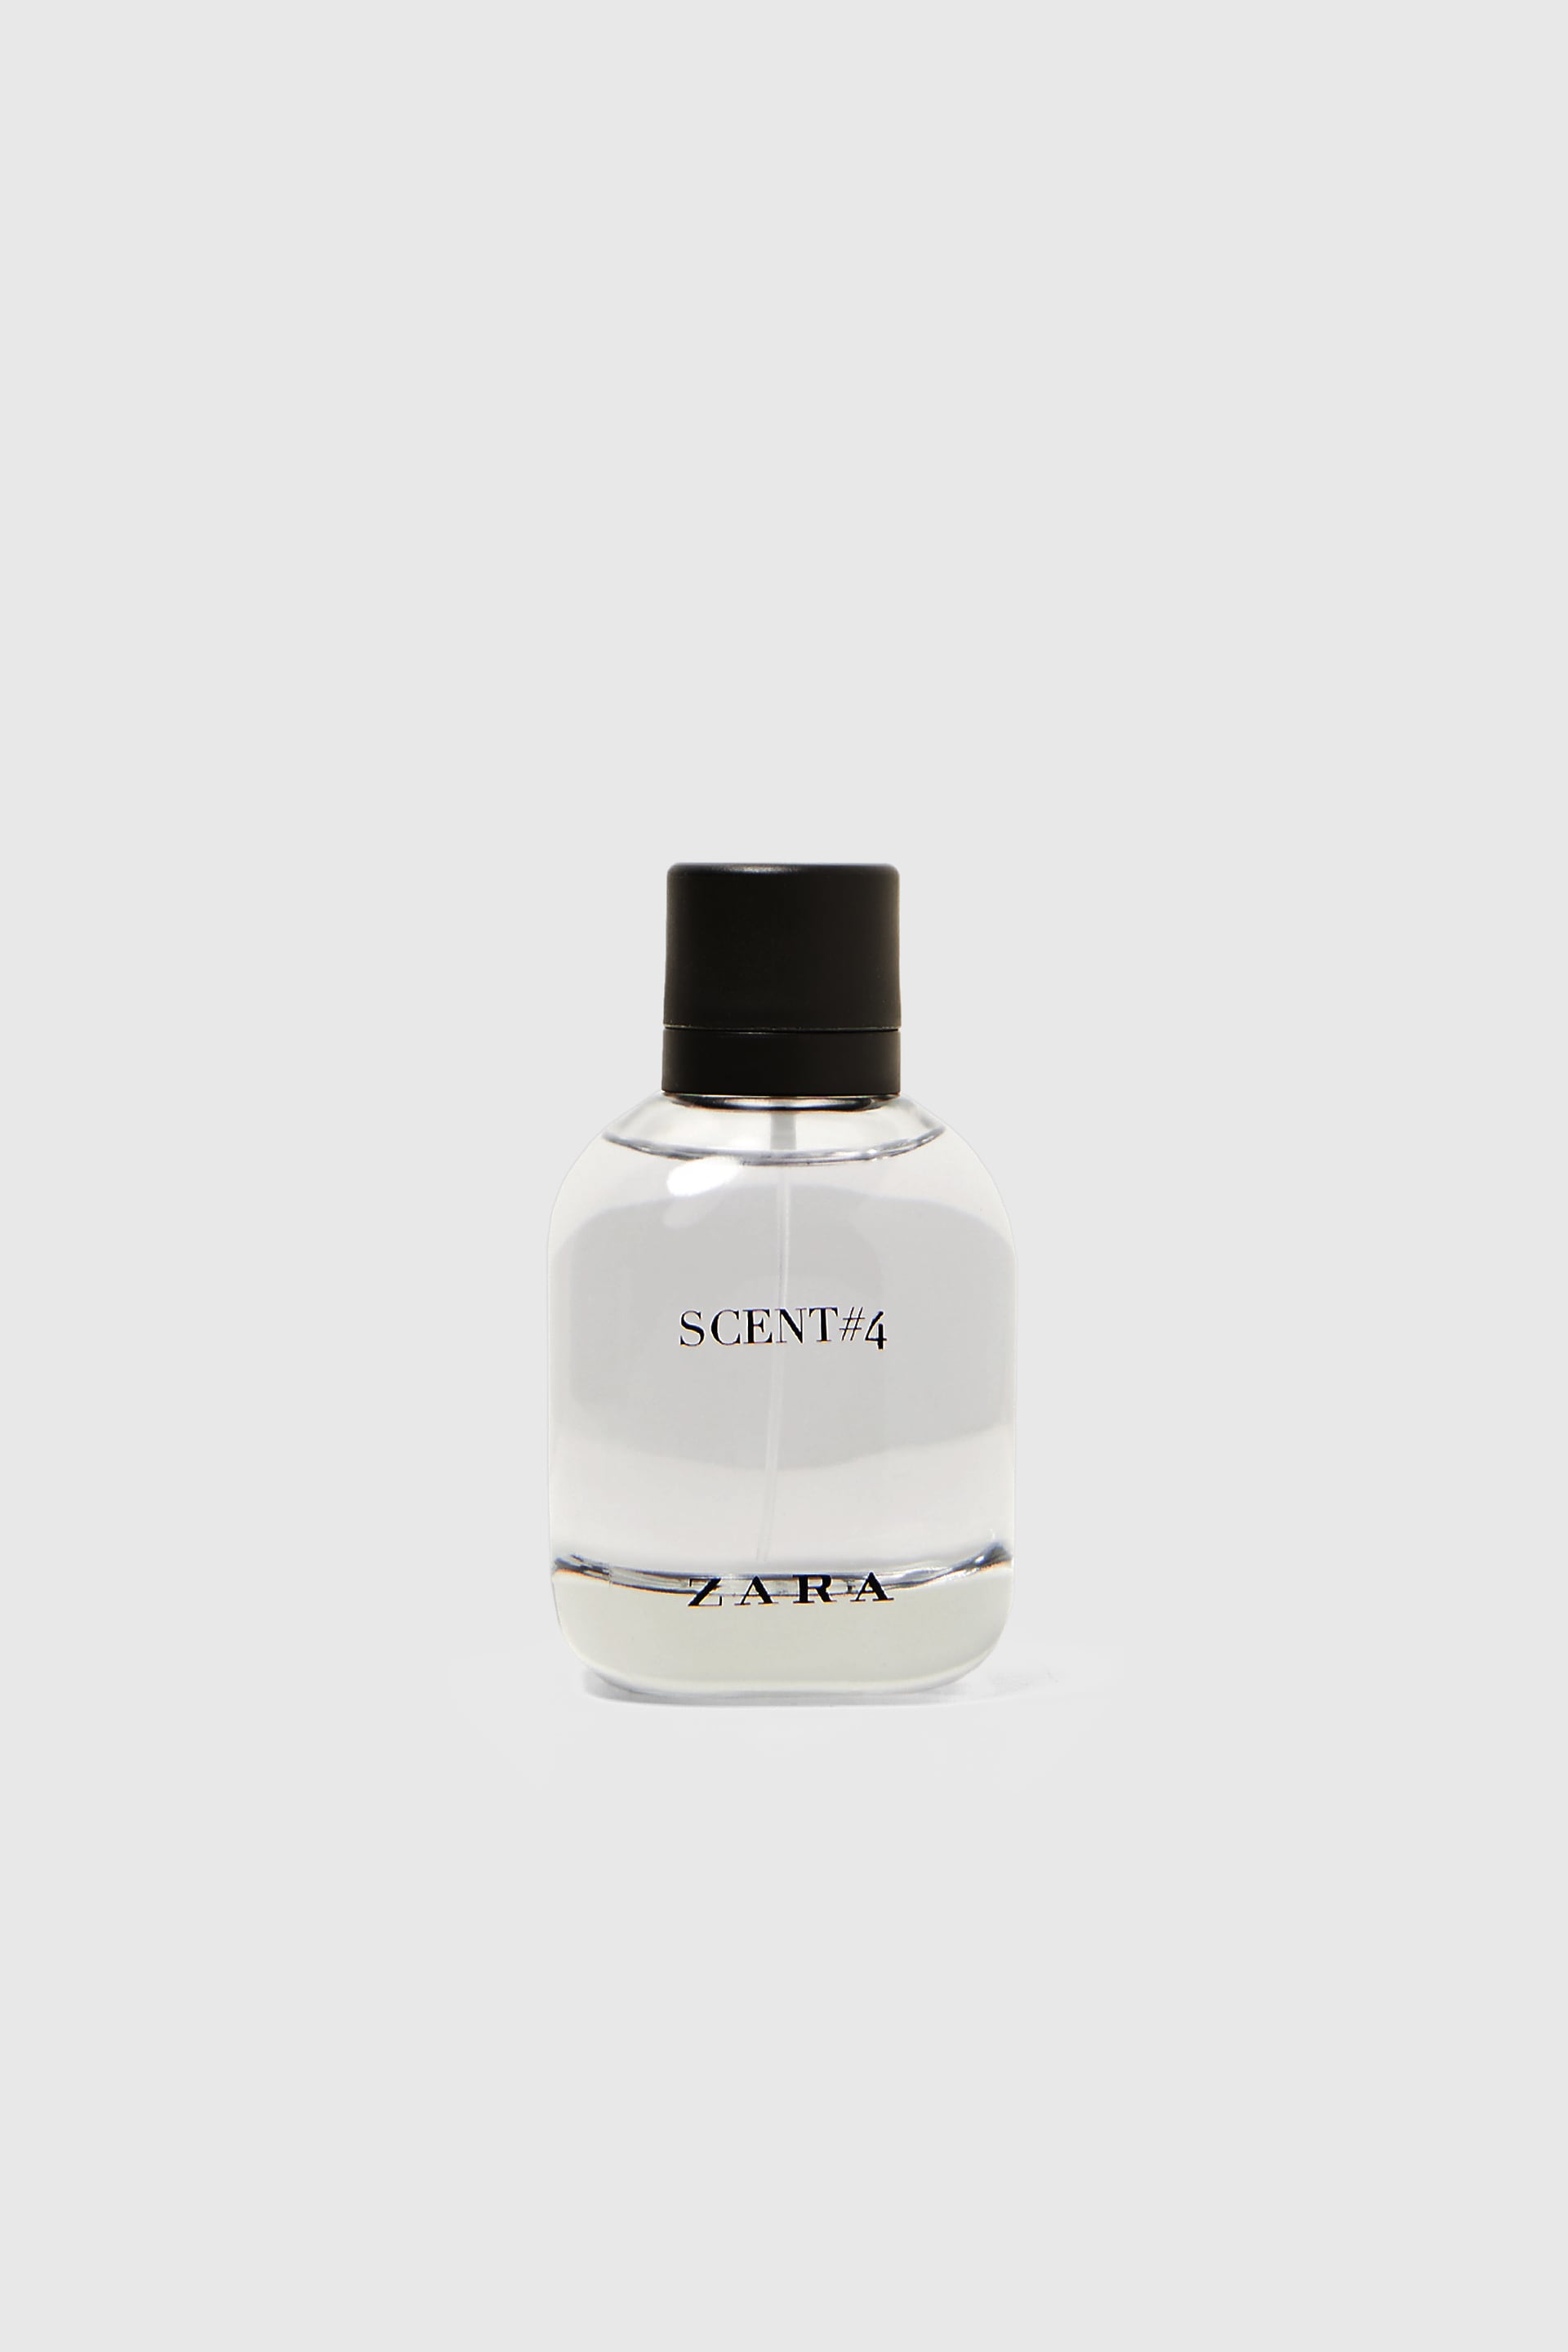 Scent #4 Zara cologne - a new fragrance 